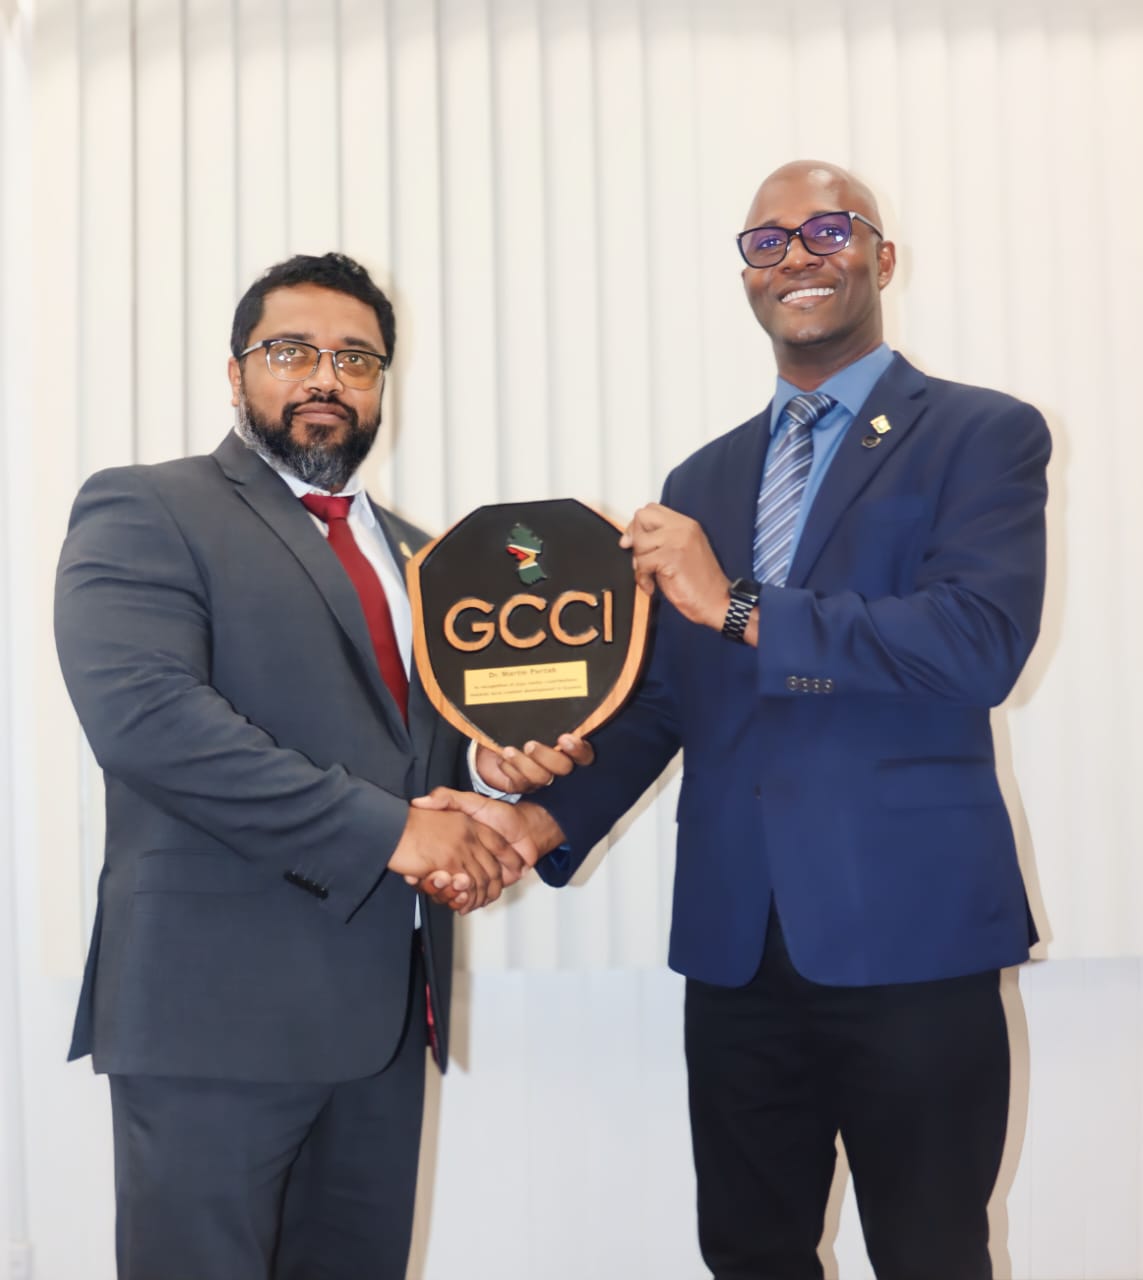 GCCI presents Special Local Content Award to Dr. Martin Pertab